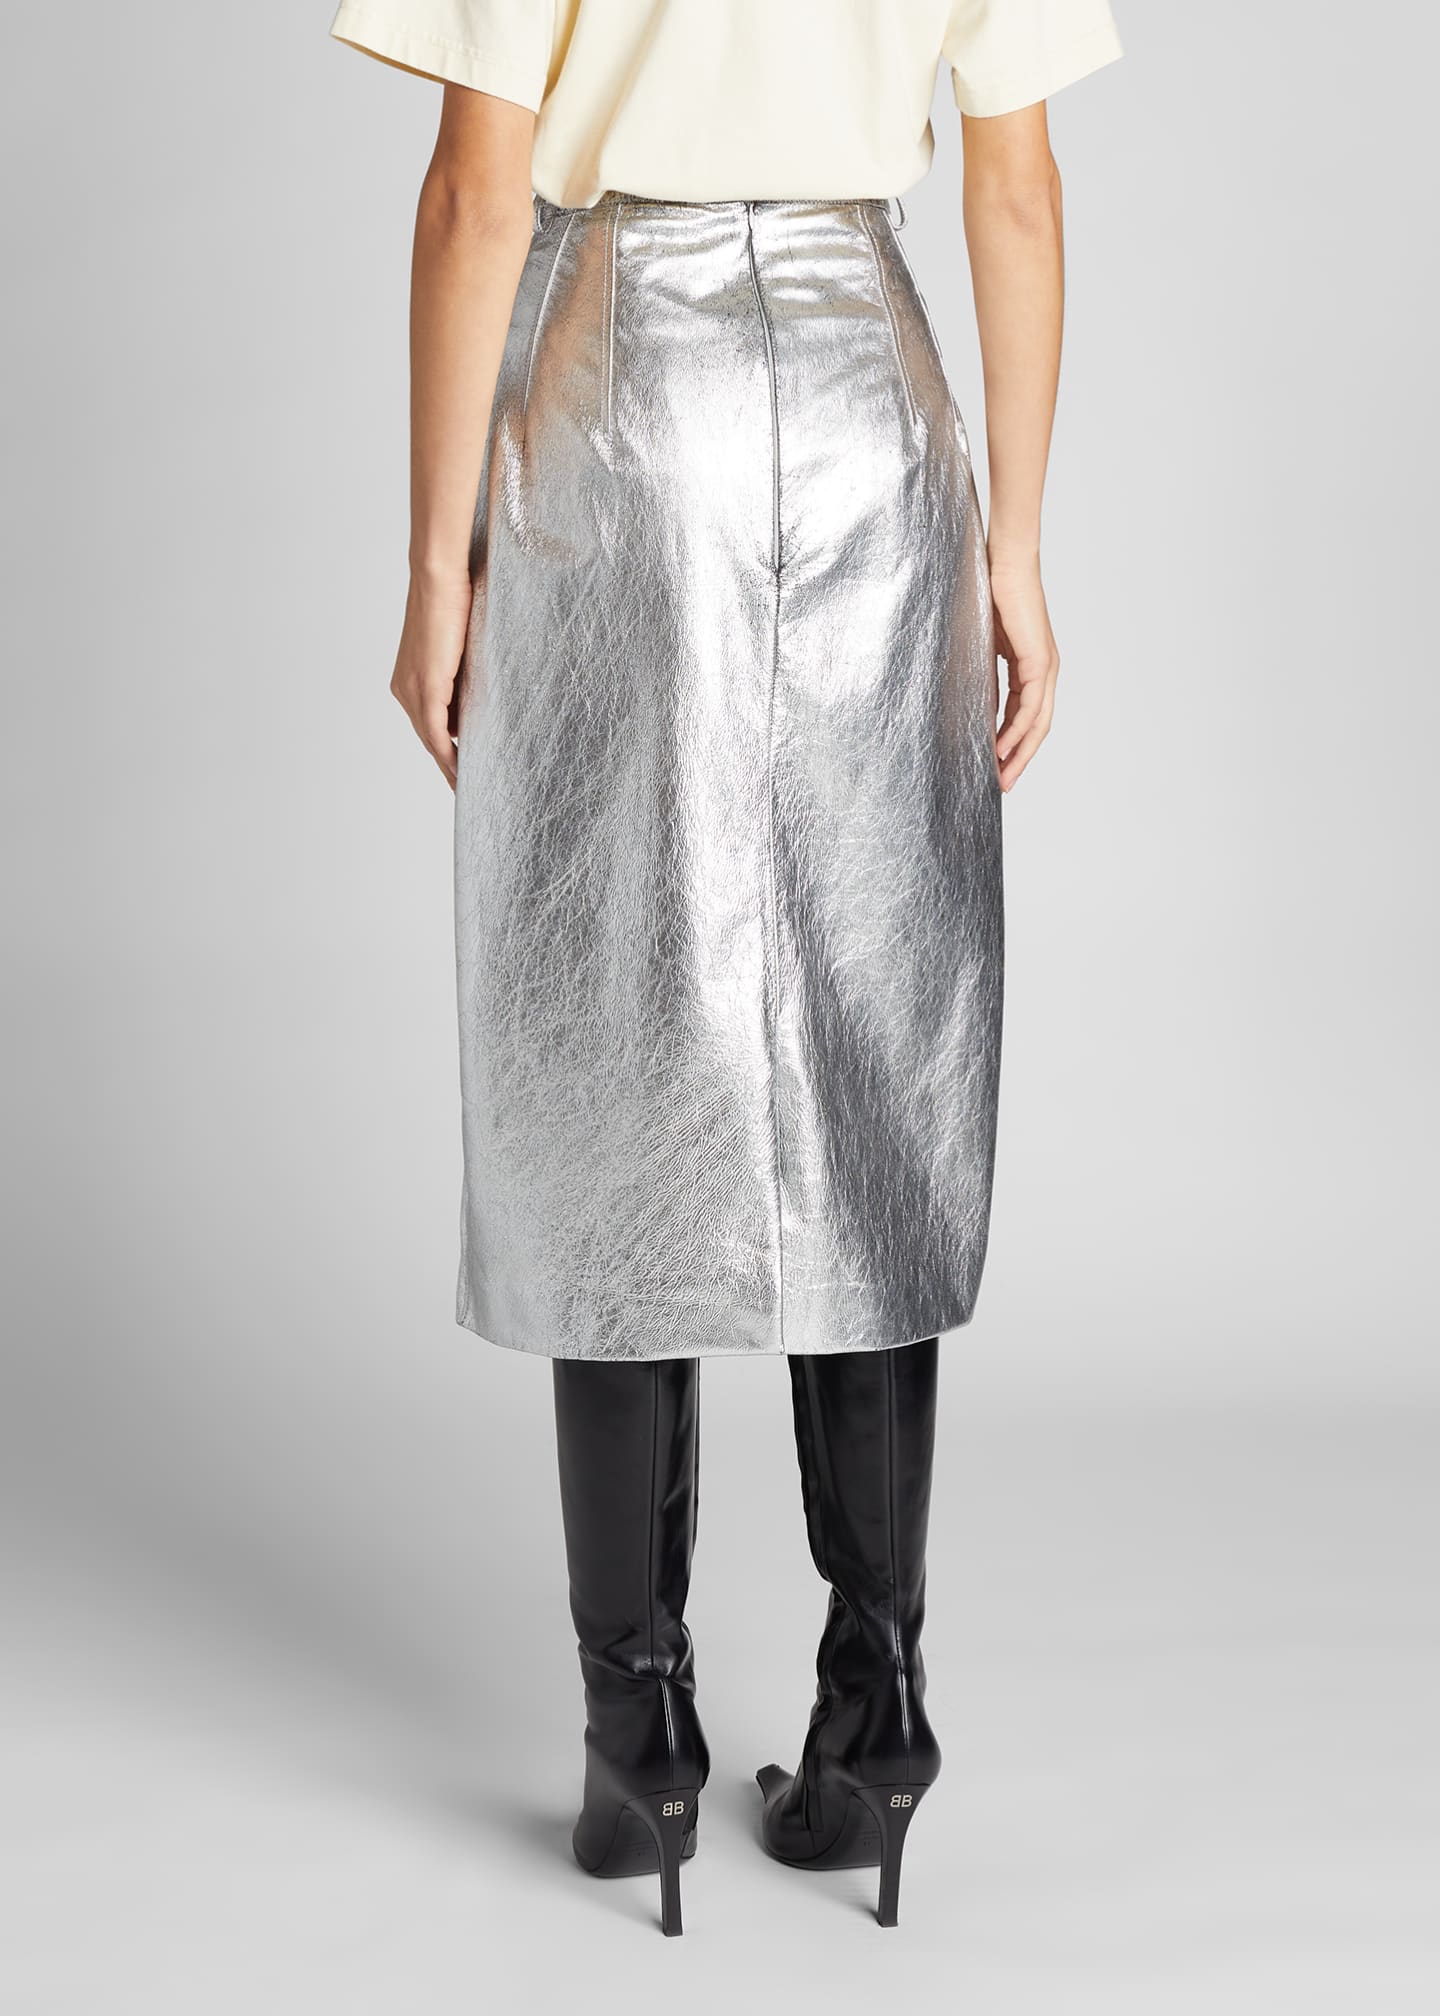 Balenciaga Metallic Leather Midi Skirt - Bergdorf Goodman